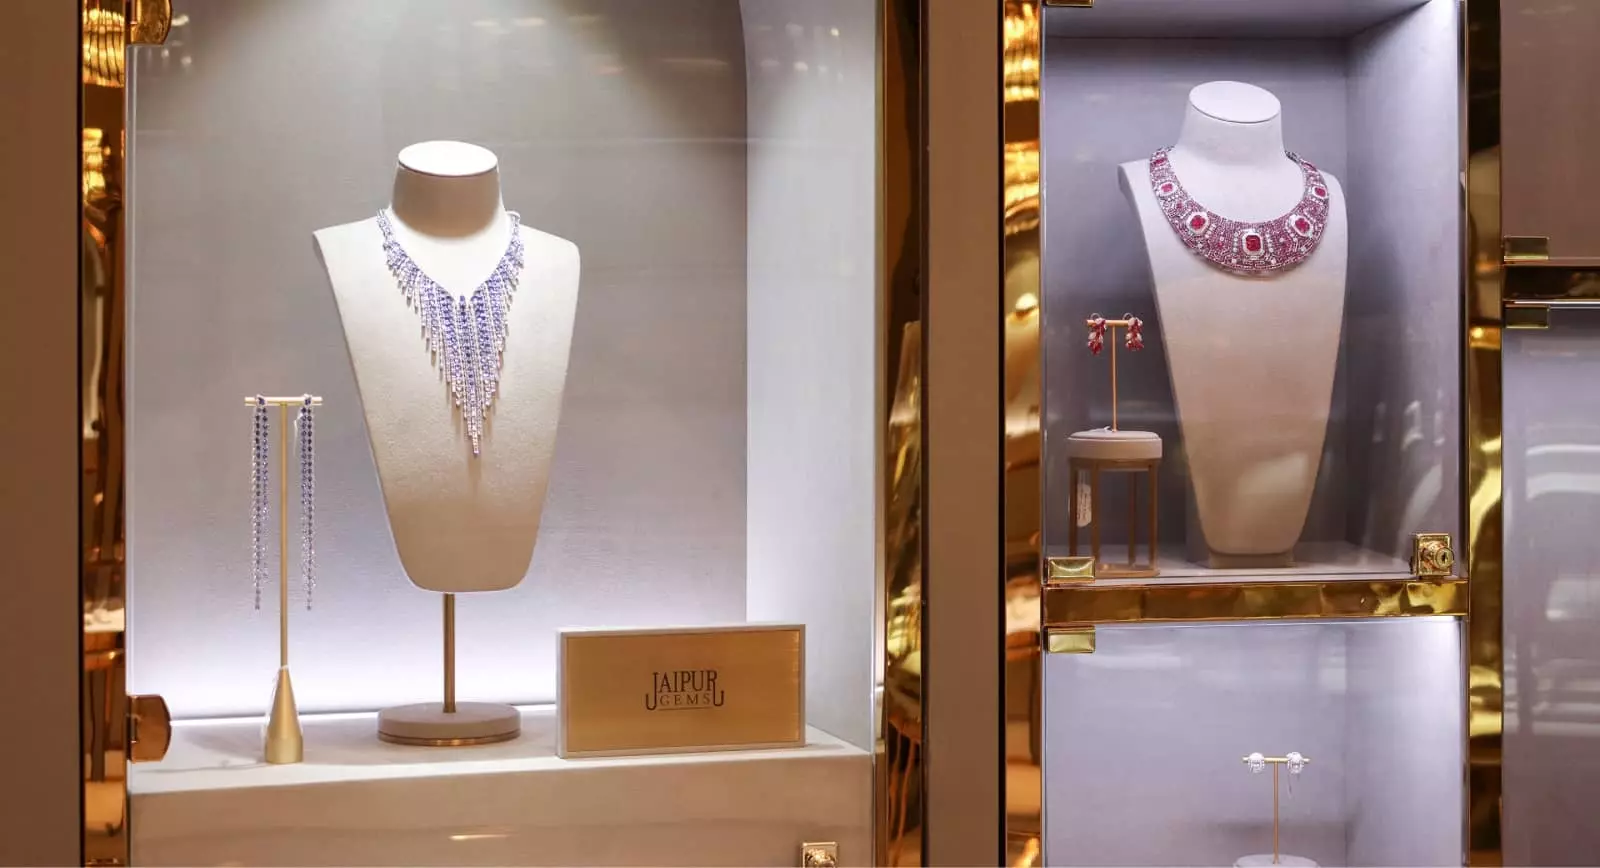 Jaipur Gems boutique at the Galleria Mall in Dubai